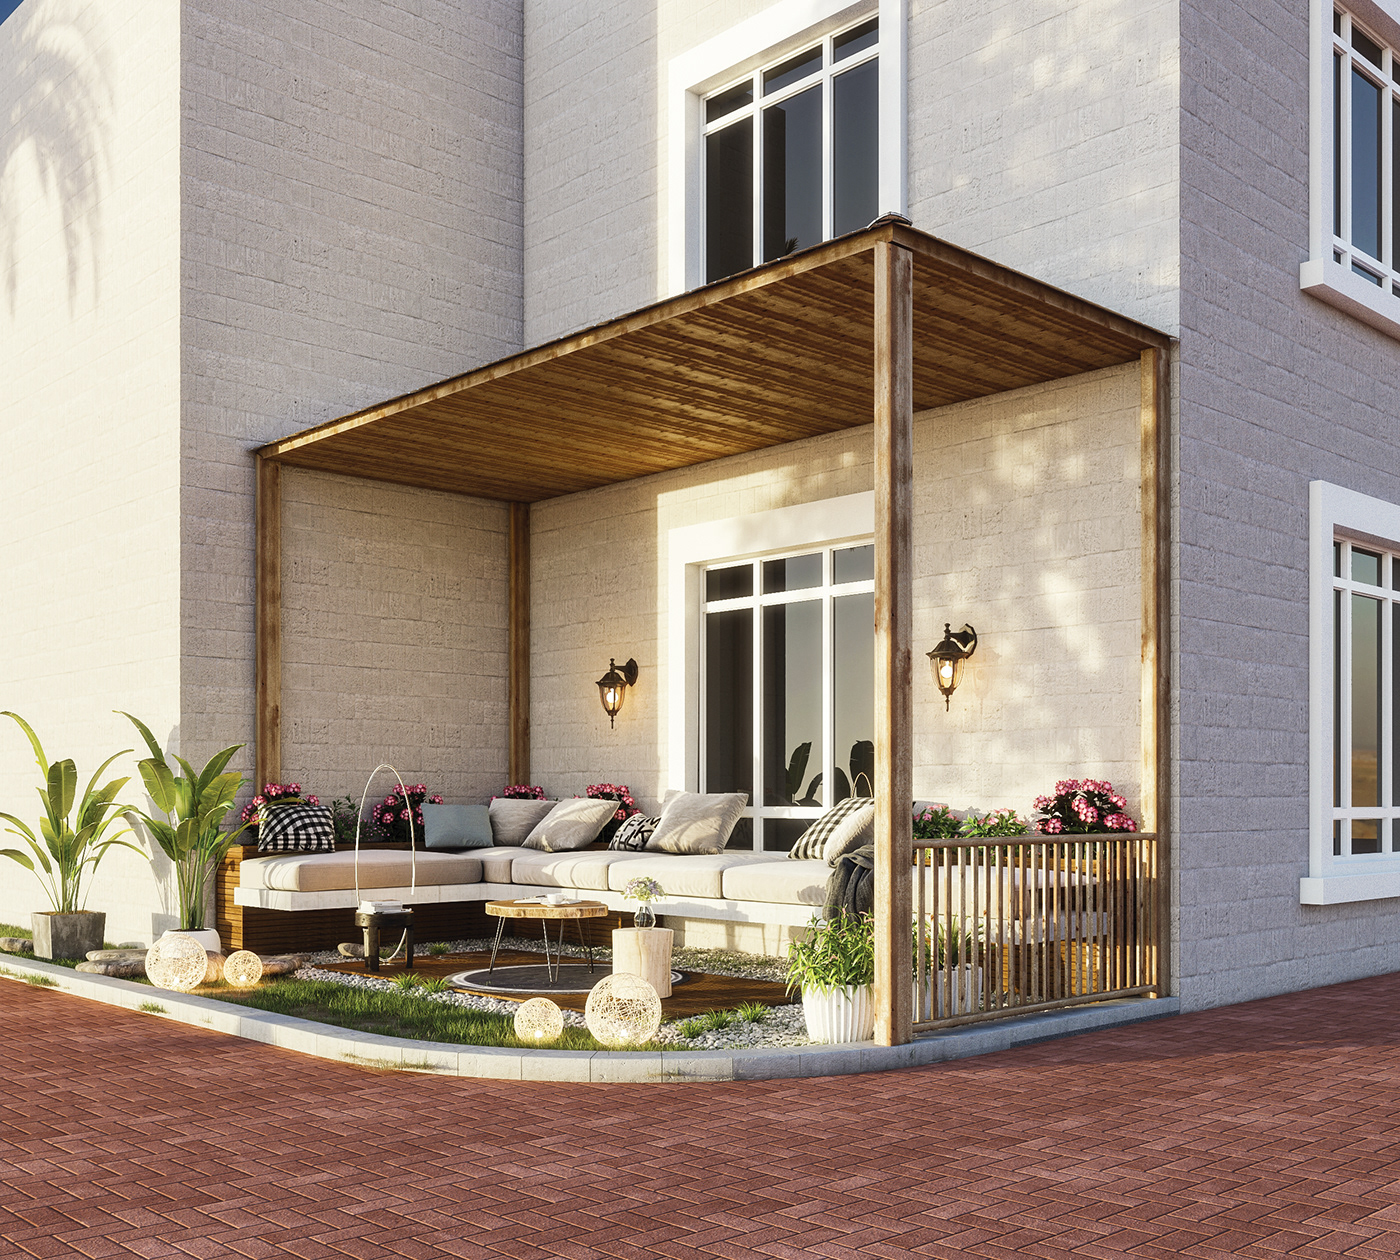 architecture exterior exterior design KSA Landscape Outdoor Design sitting are UAE vray render